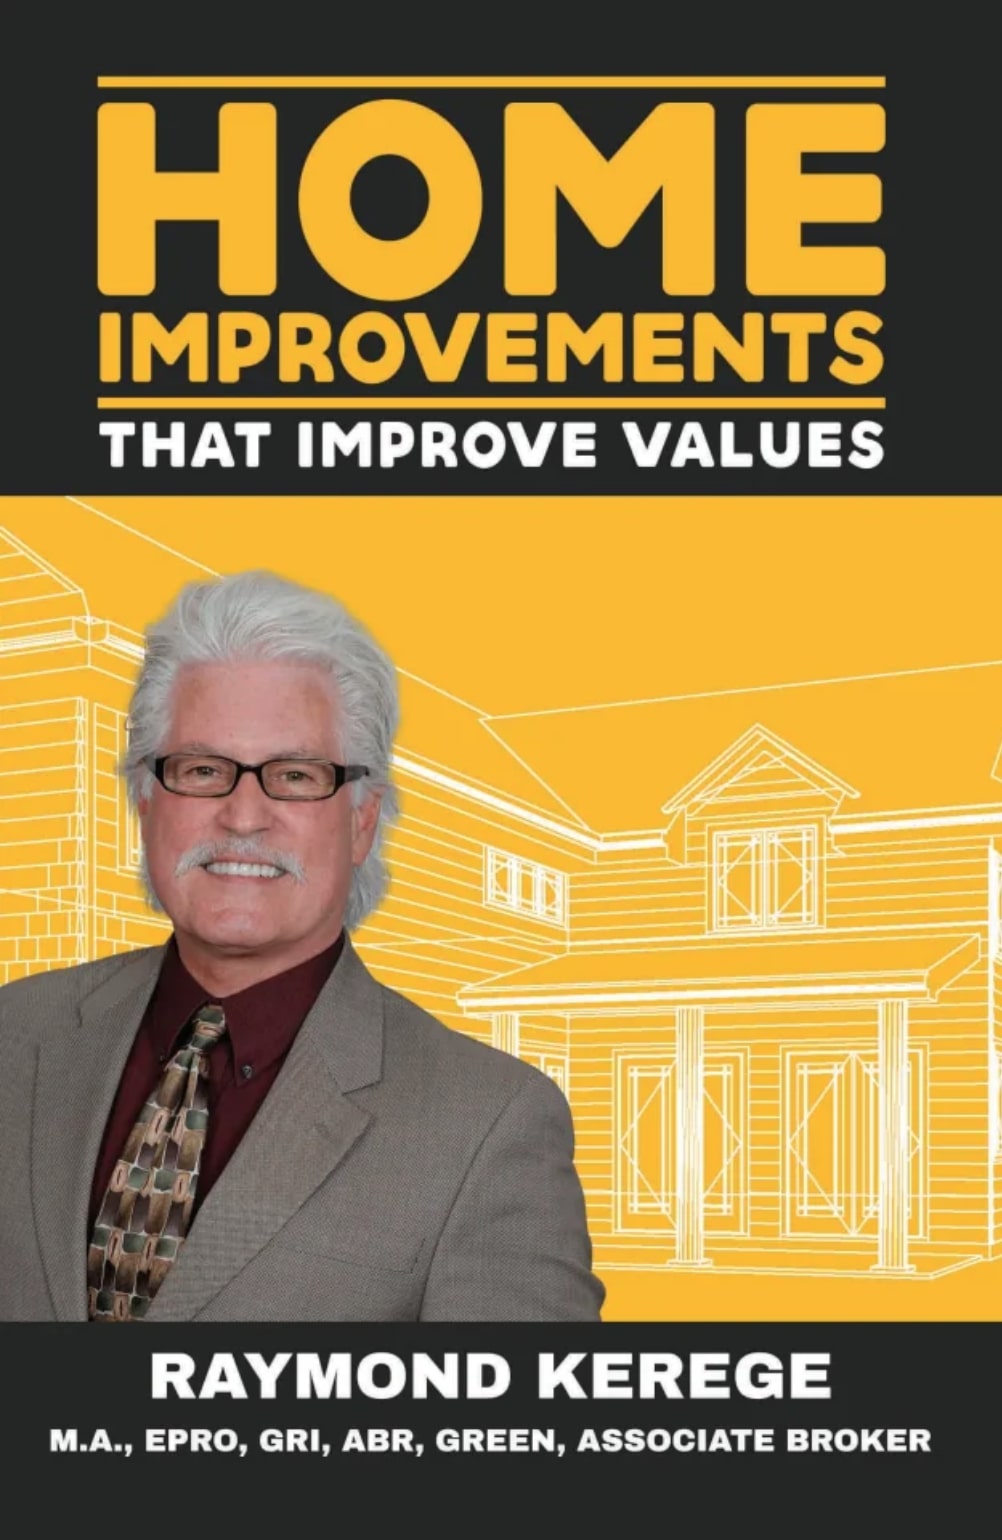 Home Improvements that improve value